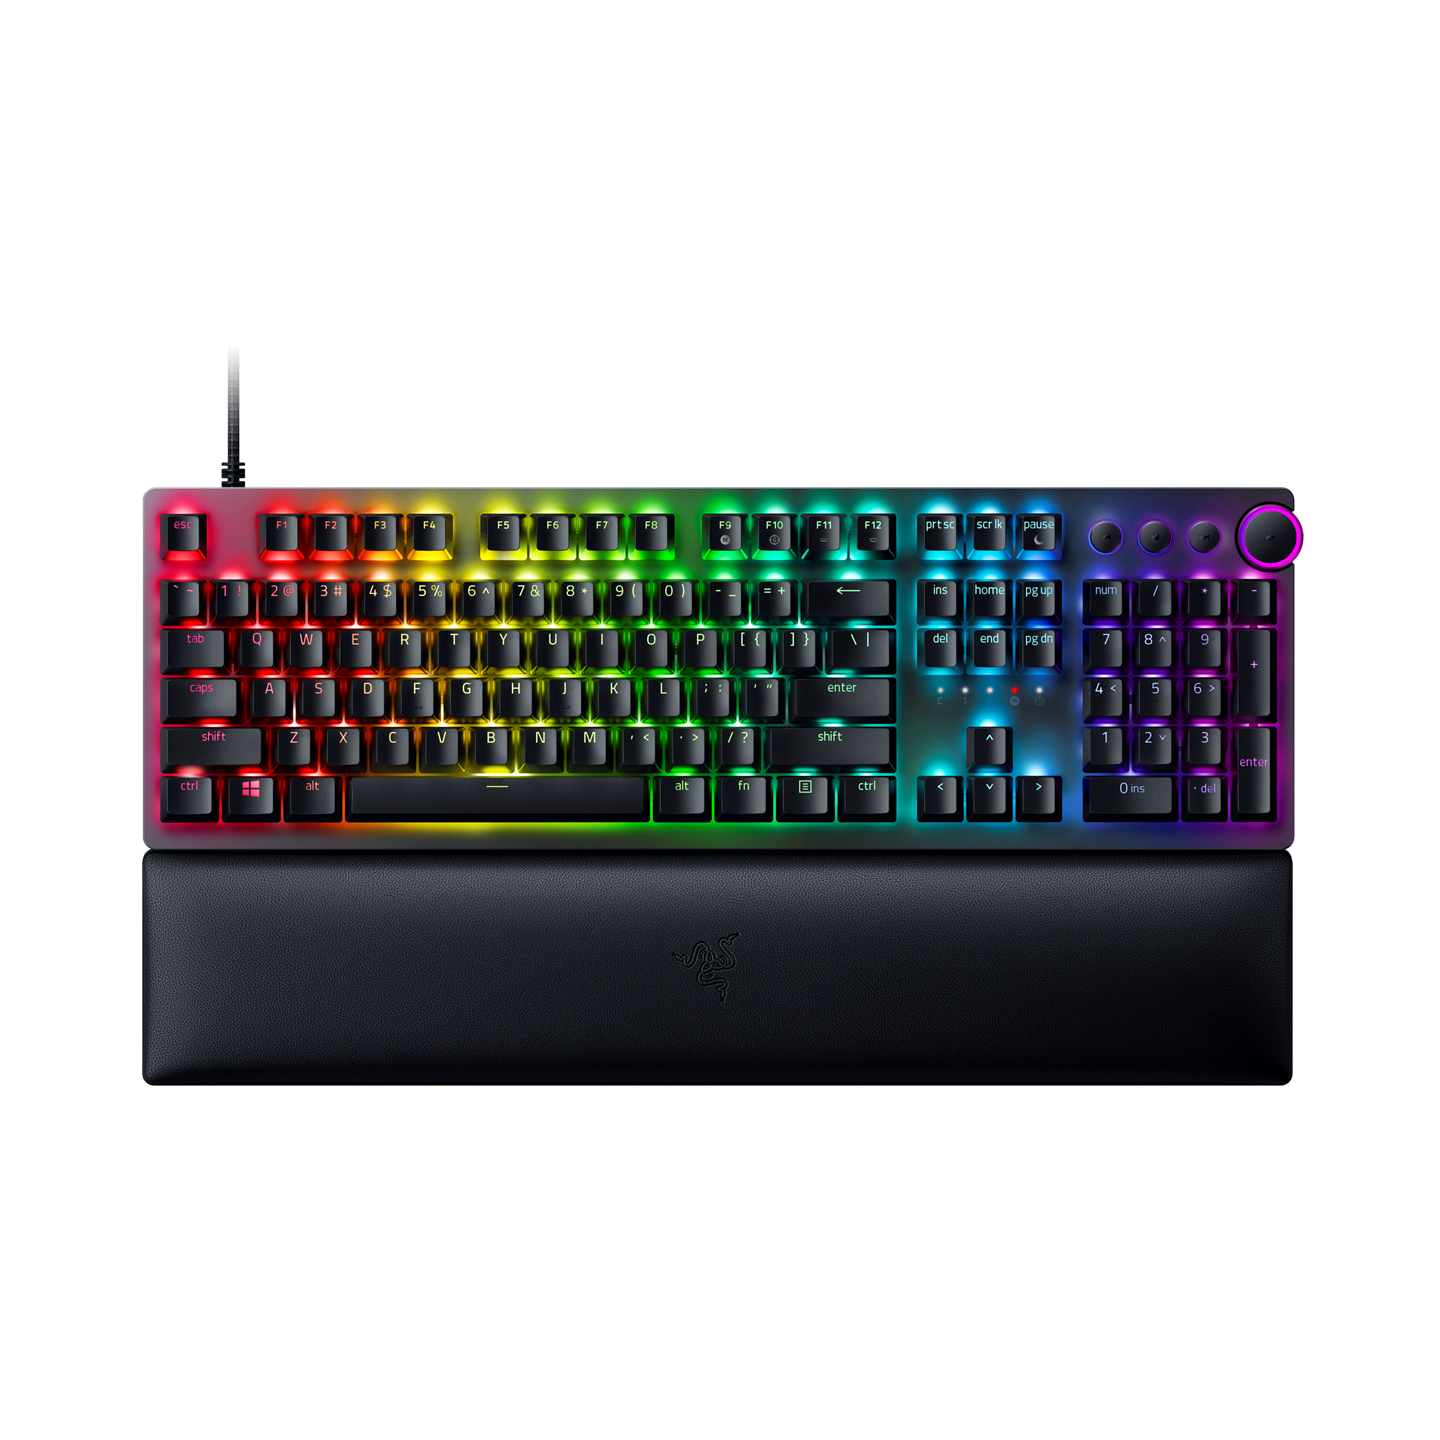 Razer Huntsman V2 Wired Chroma PC, Keyboard for RGB, Black Switch Optical Clicky Rest, Gaming Wrist